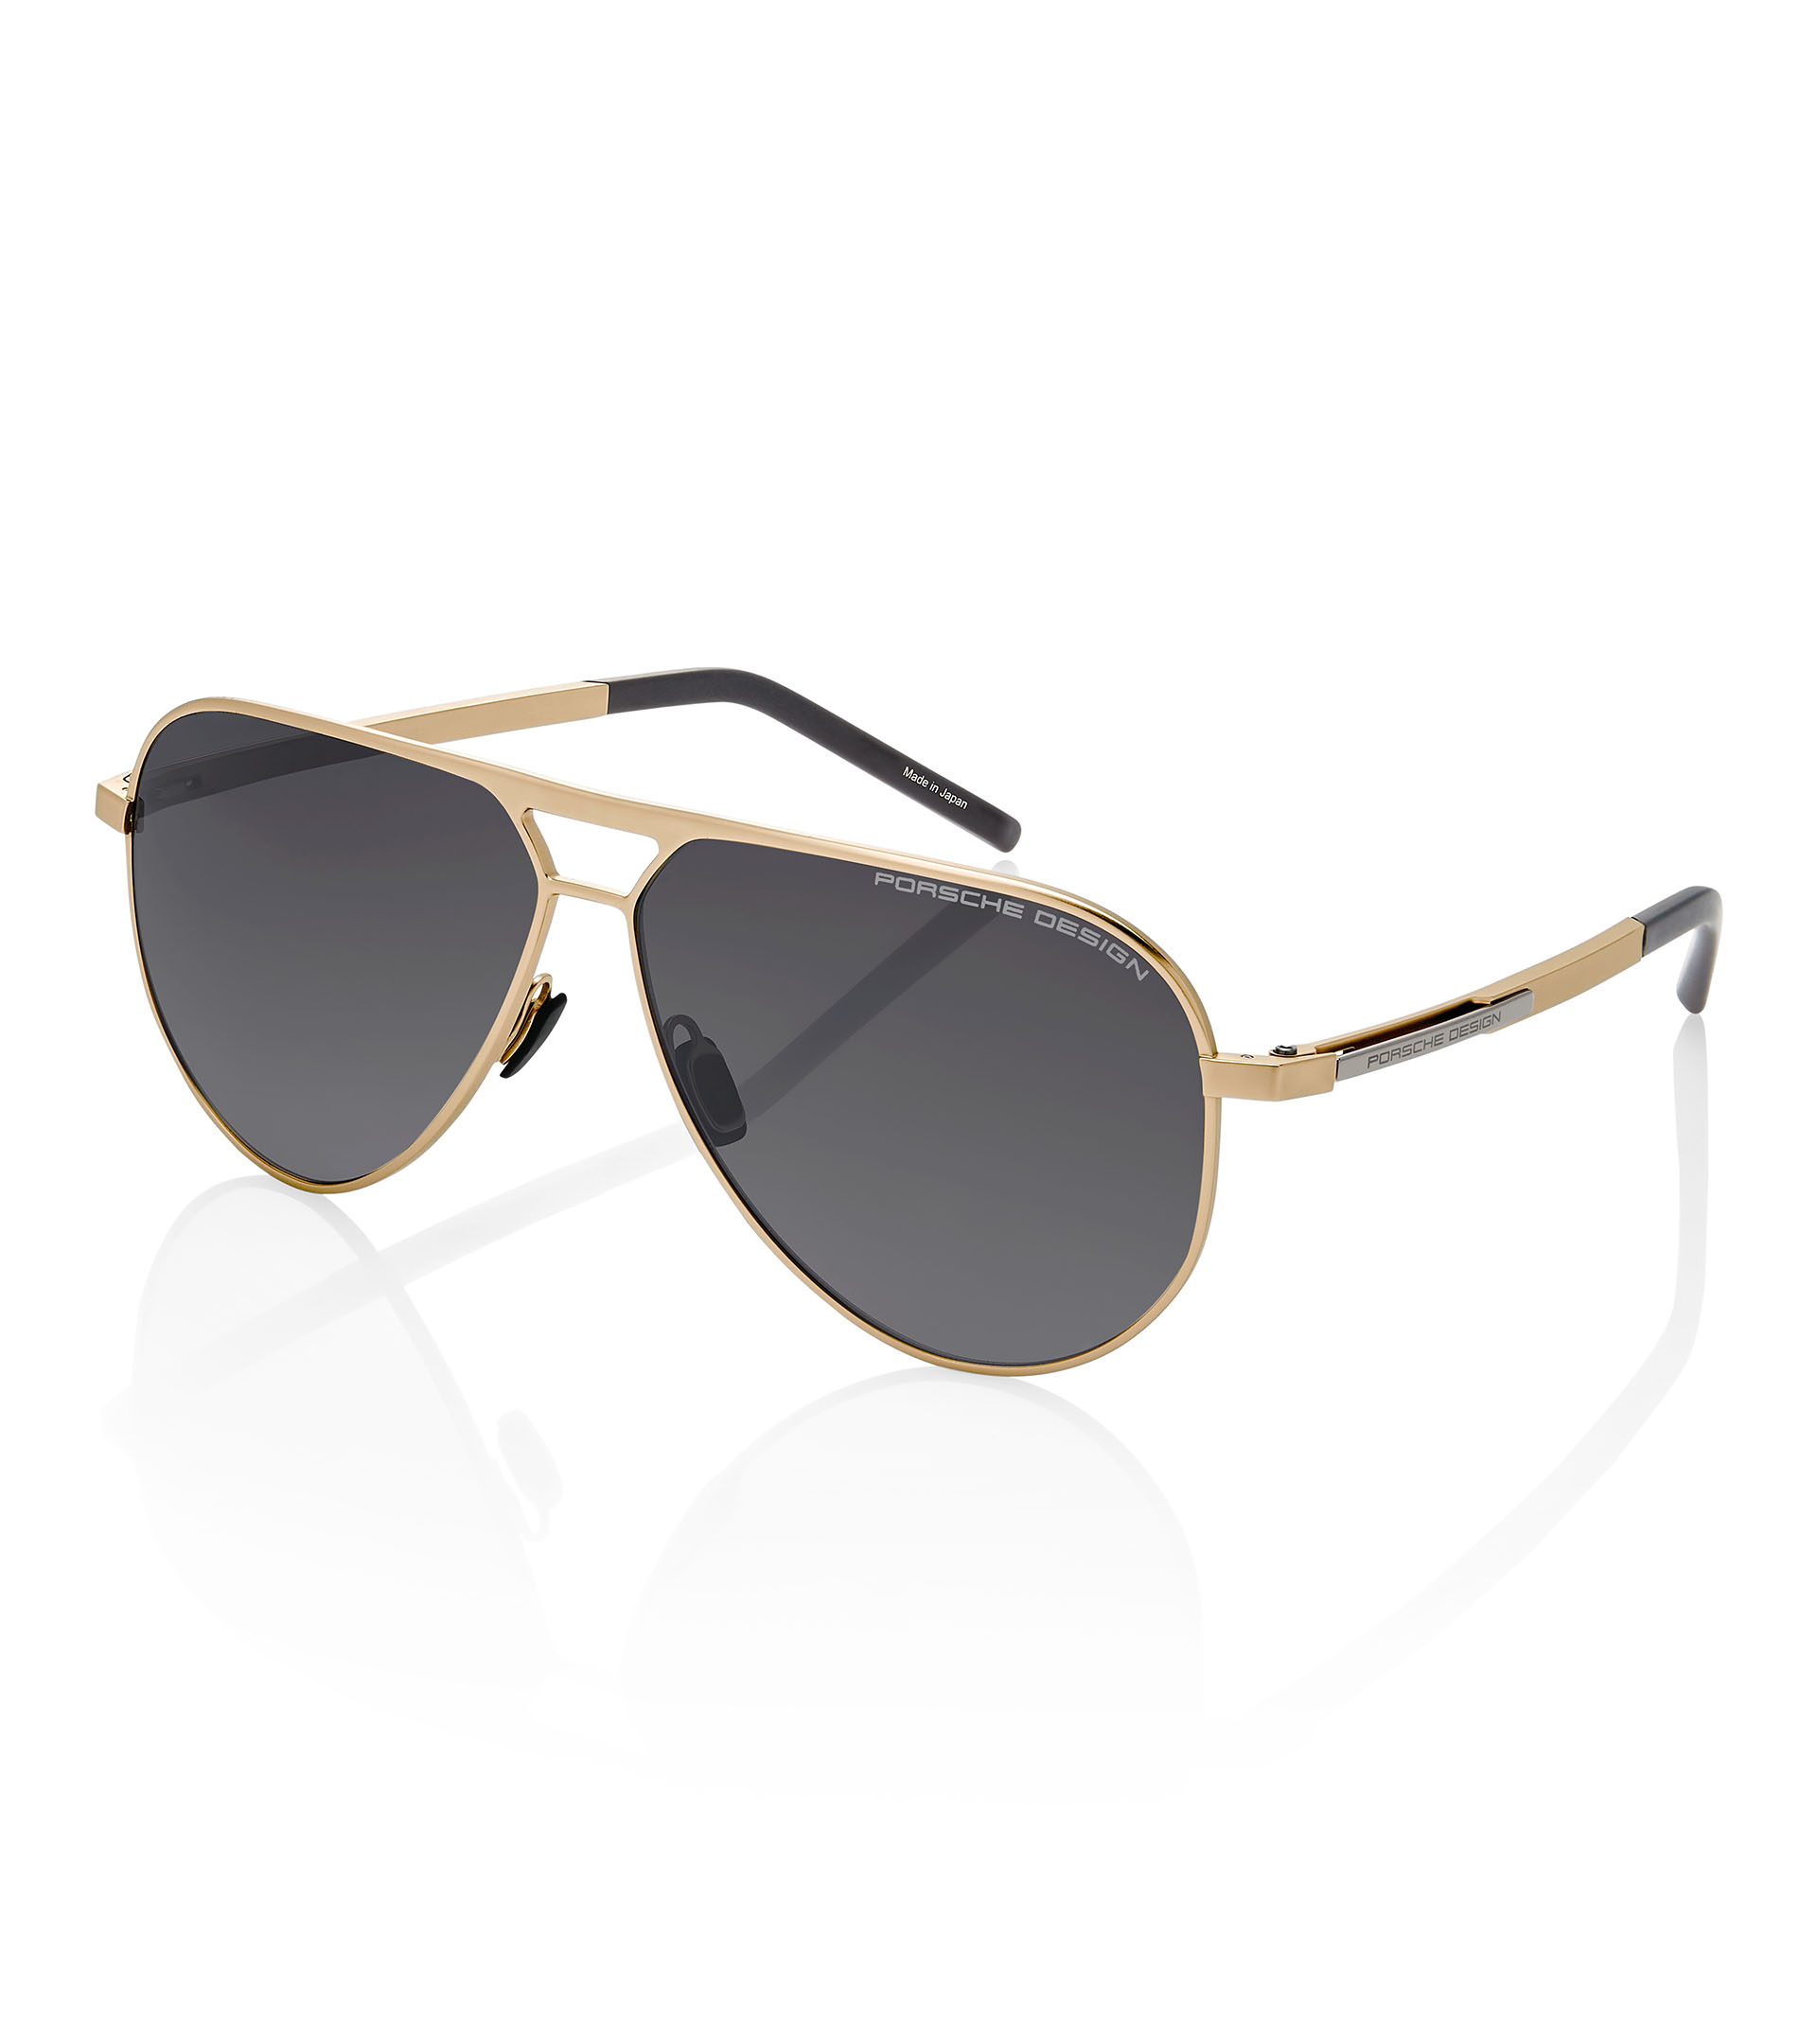 Sunglasses P´8942 - Stylish Aviator Sunglasses for Men | Porsche Design ...